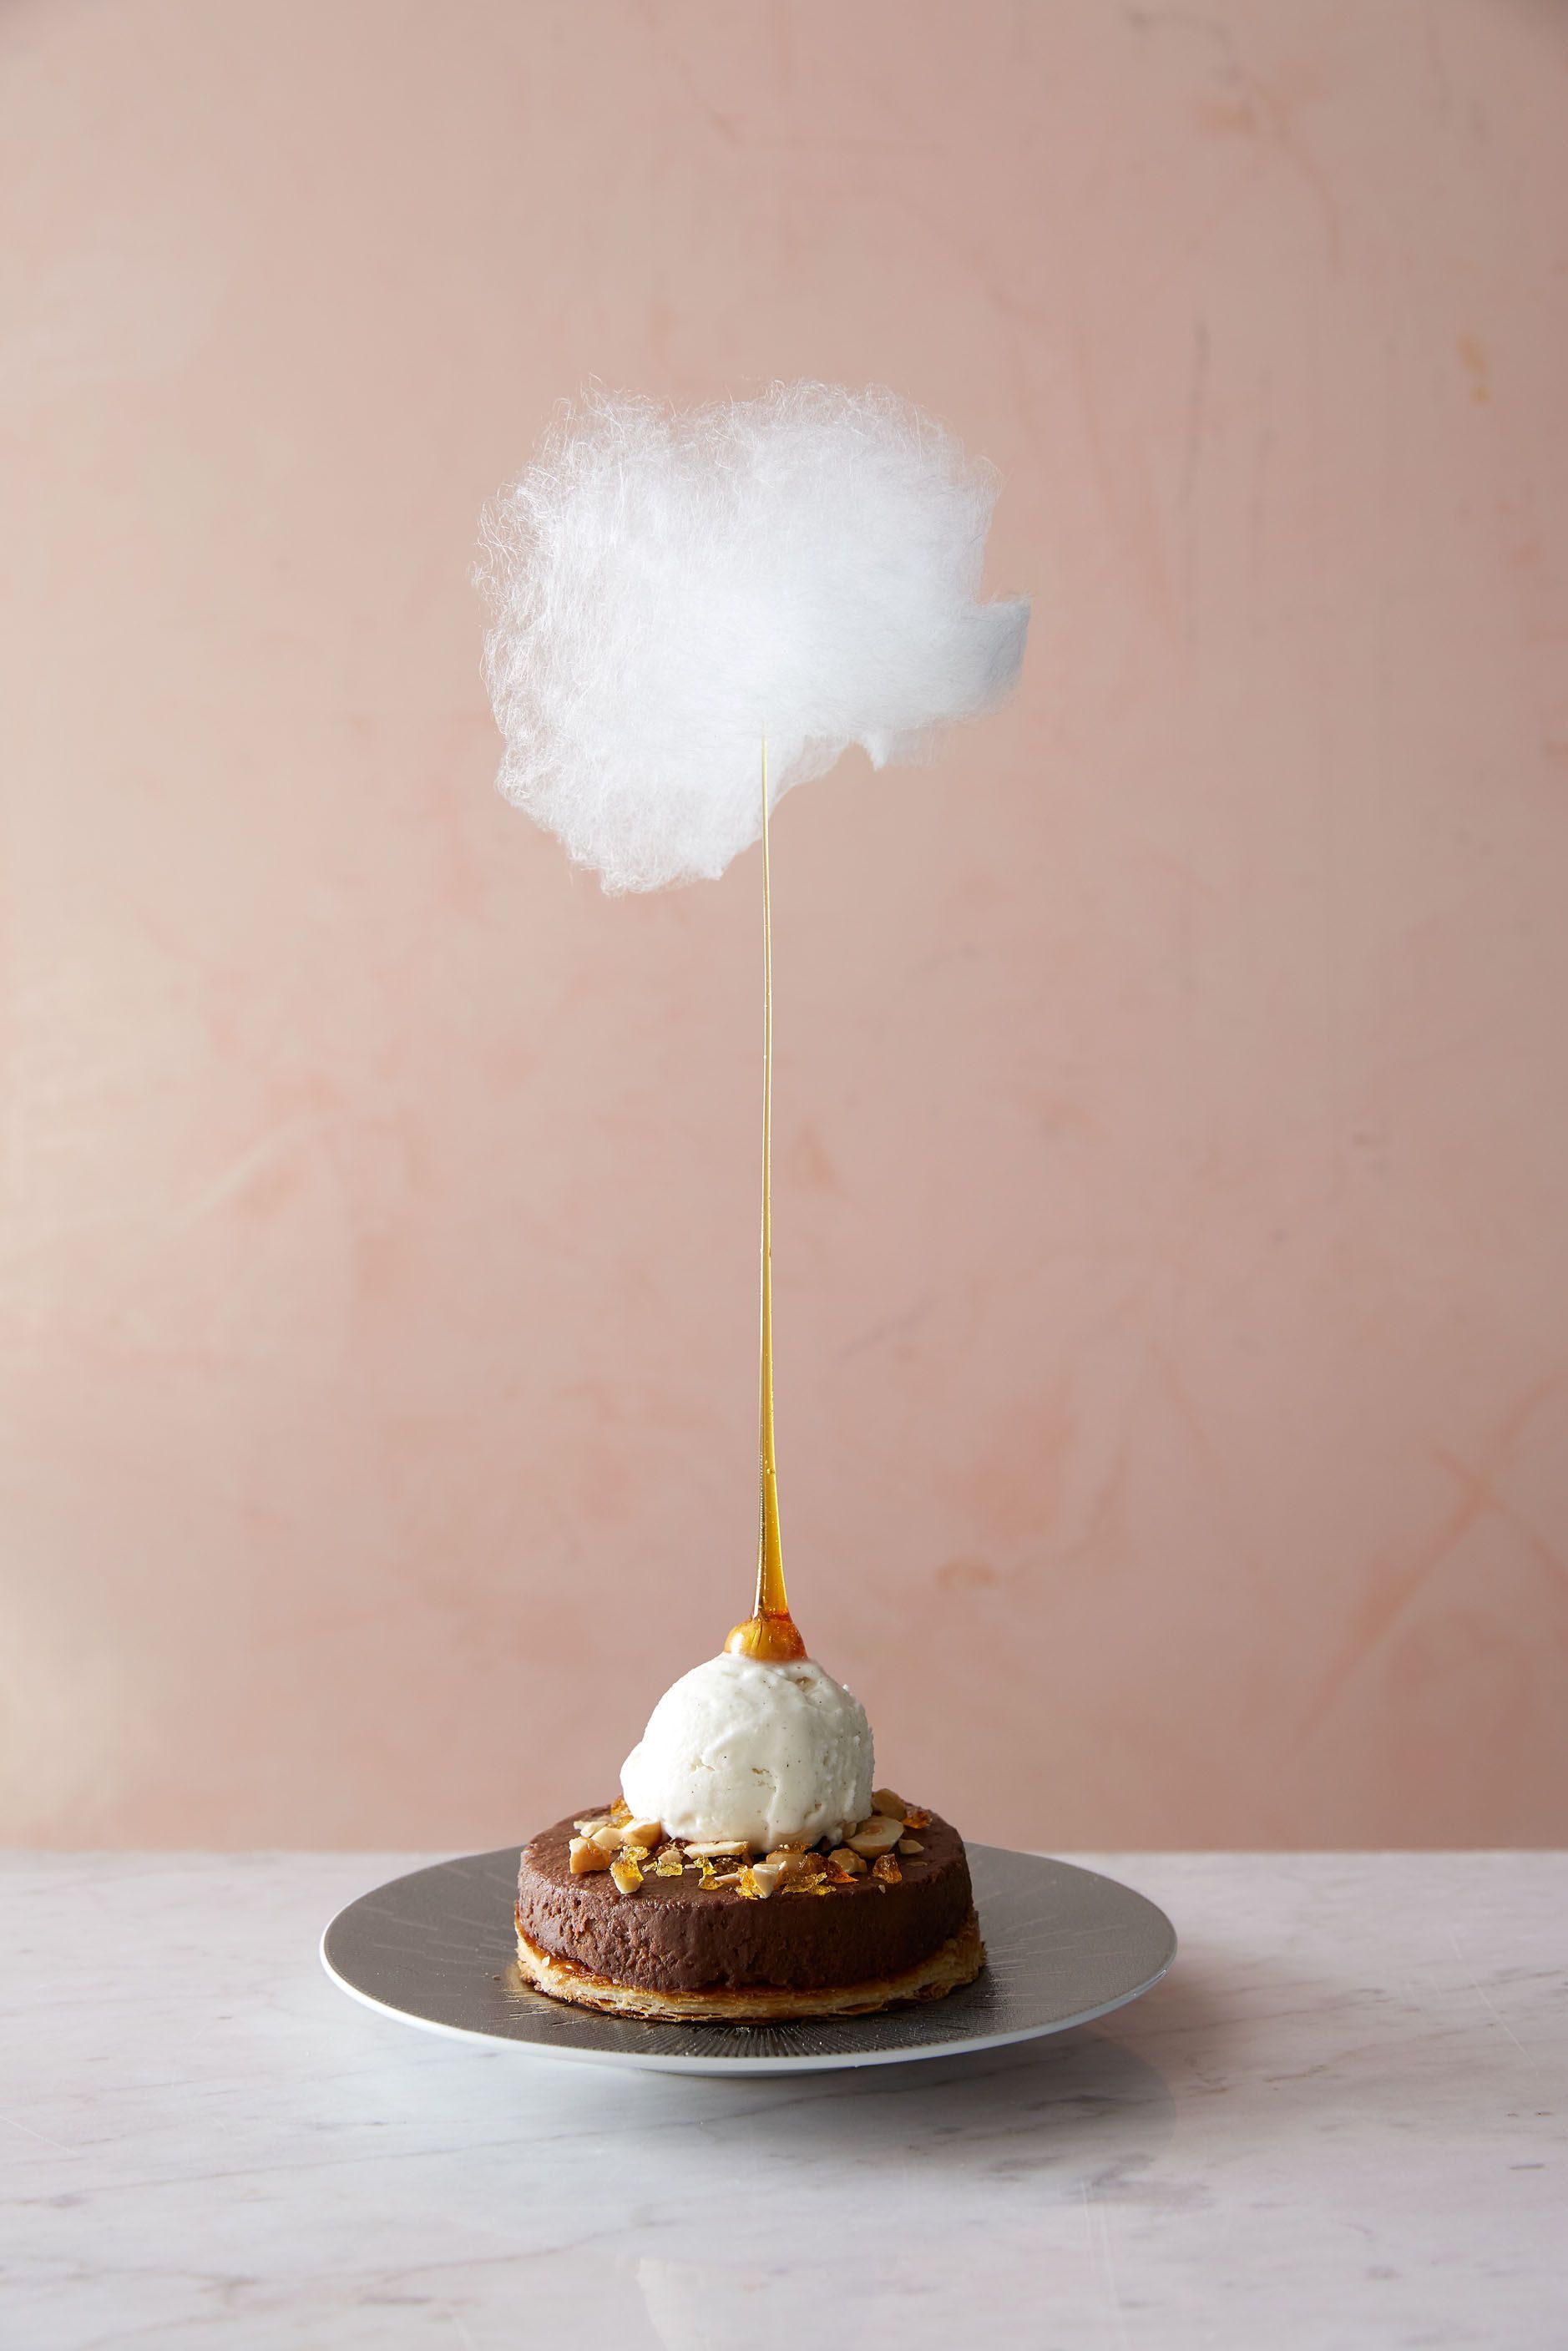 17 desserts Photography heavens ideas